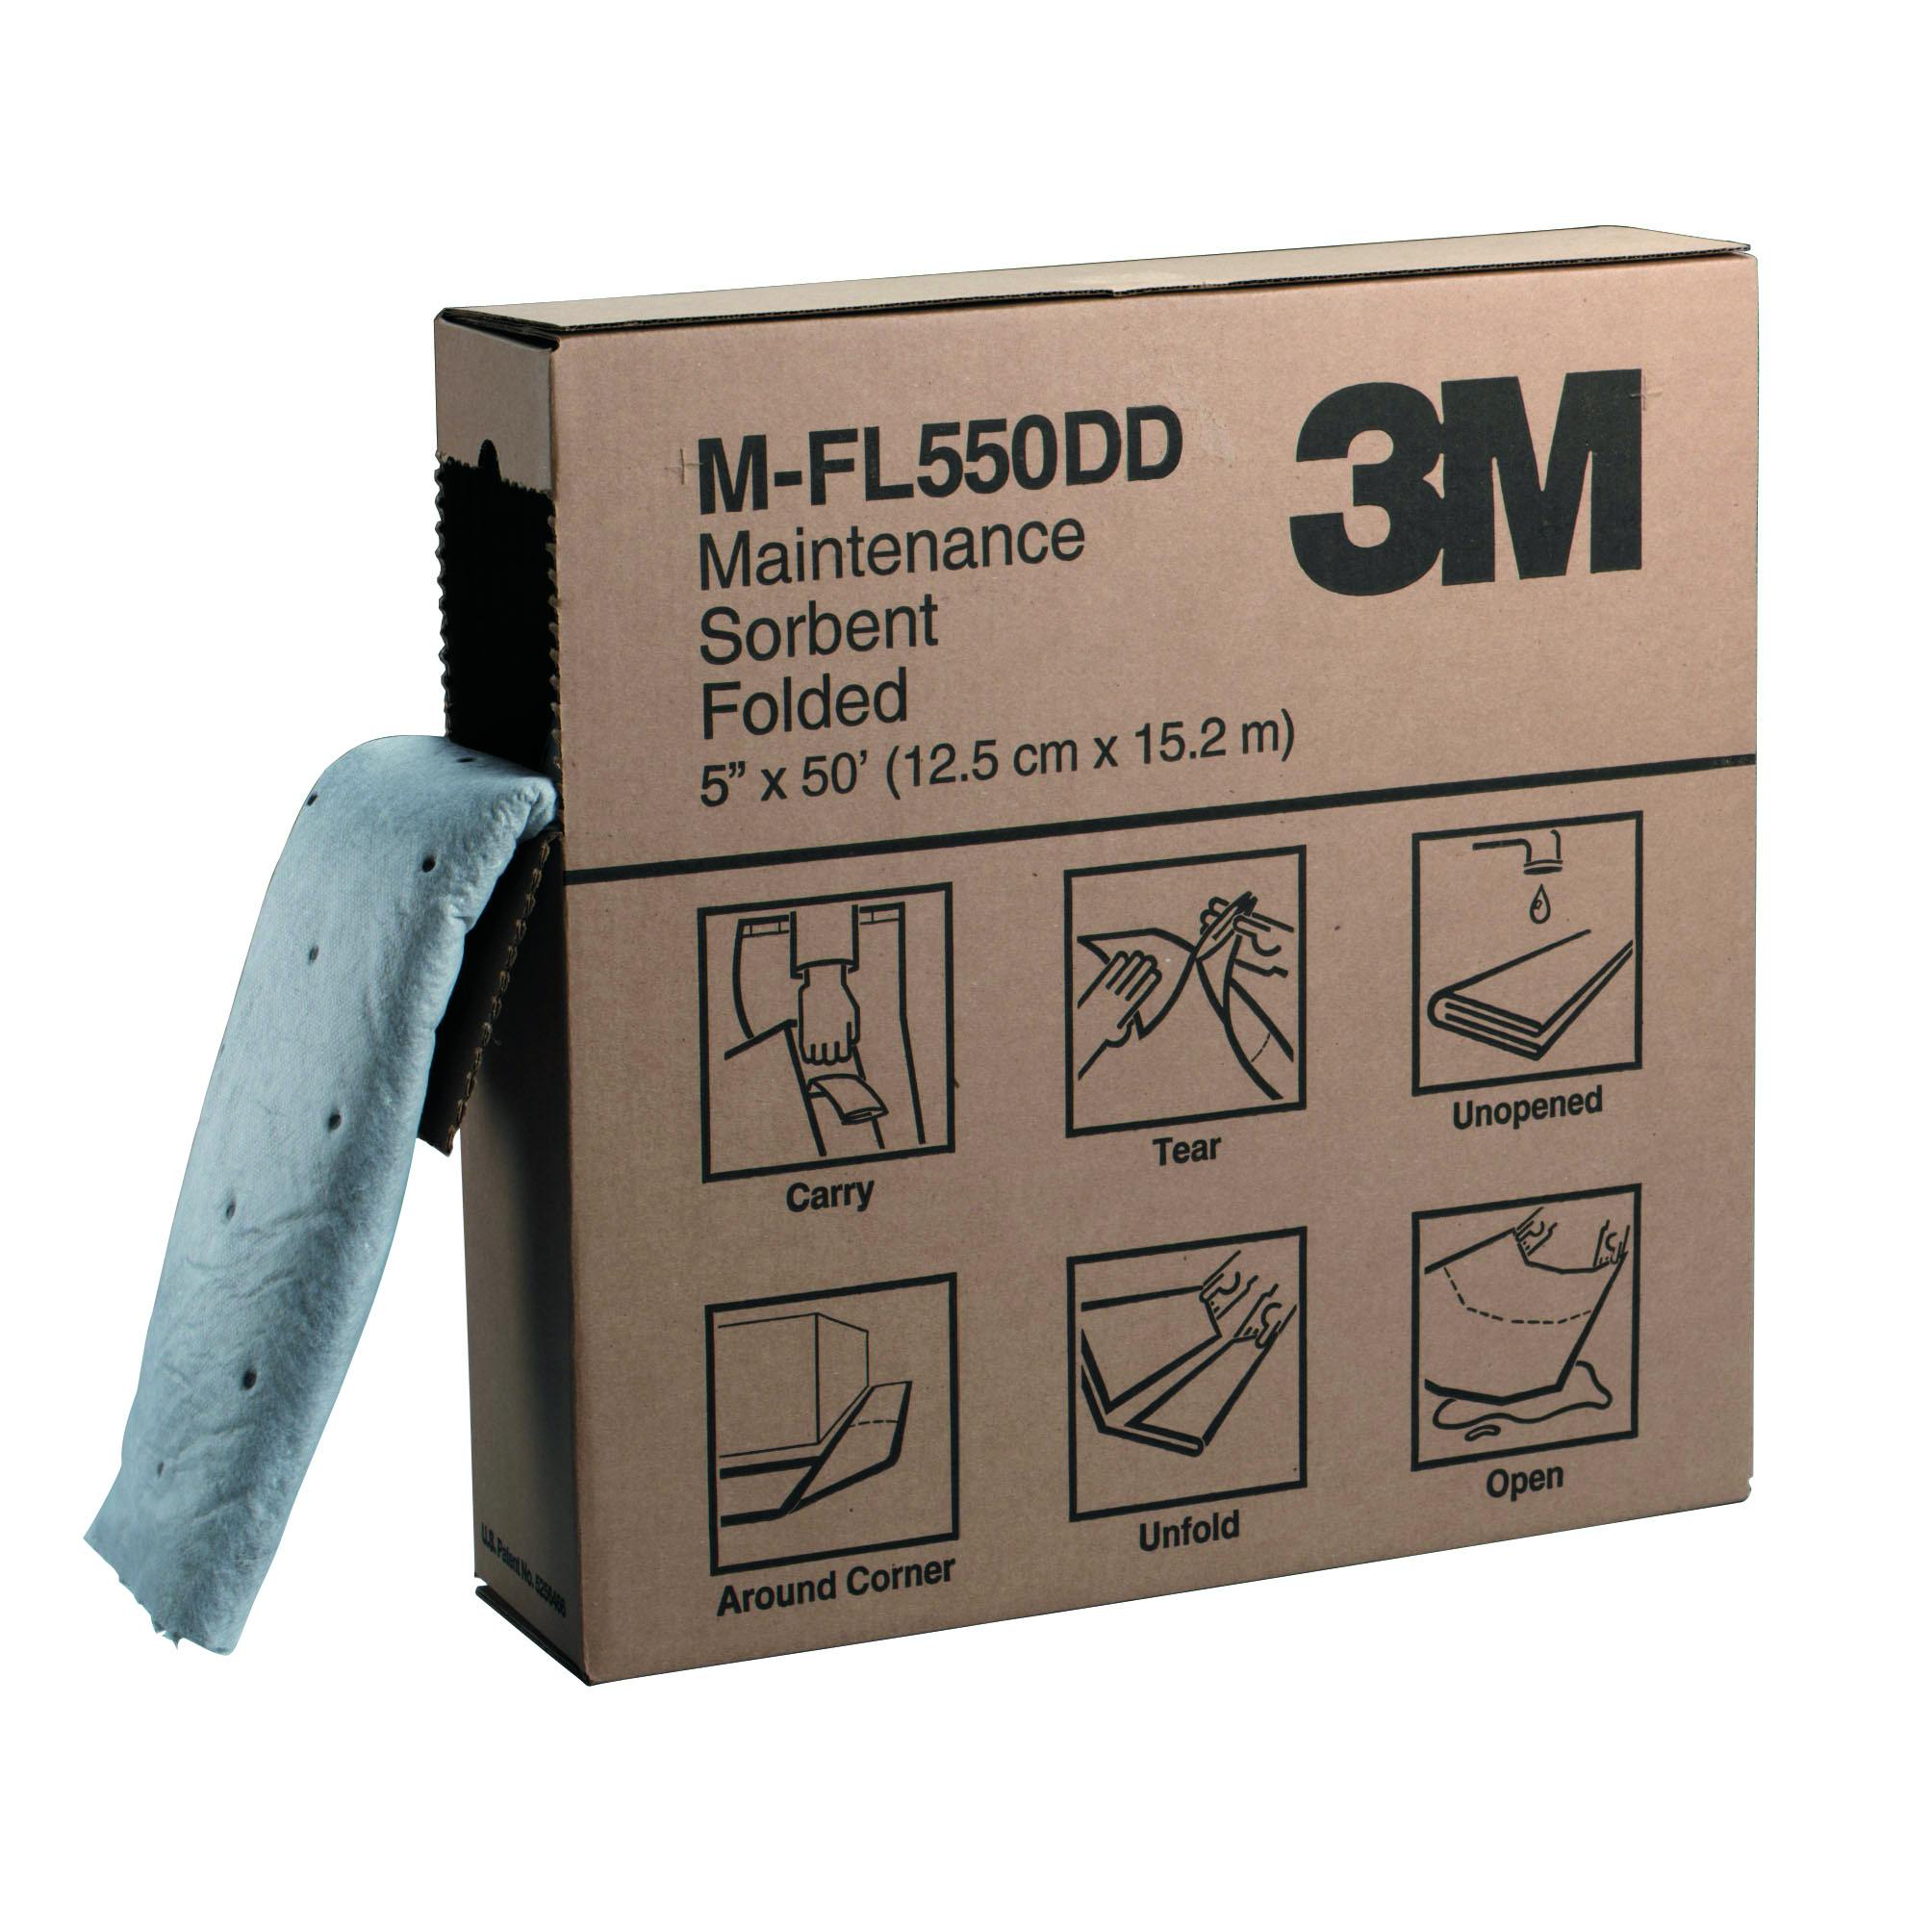 3M™ General Purpose Sorbent Folded M-FL550DD/M-F2001/07172(AAD), Environmental Safety Product, High Capacity, 3 ea/cs